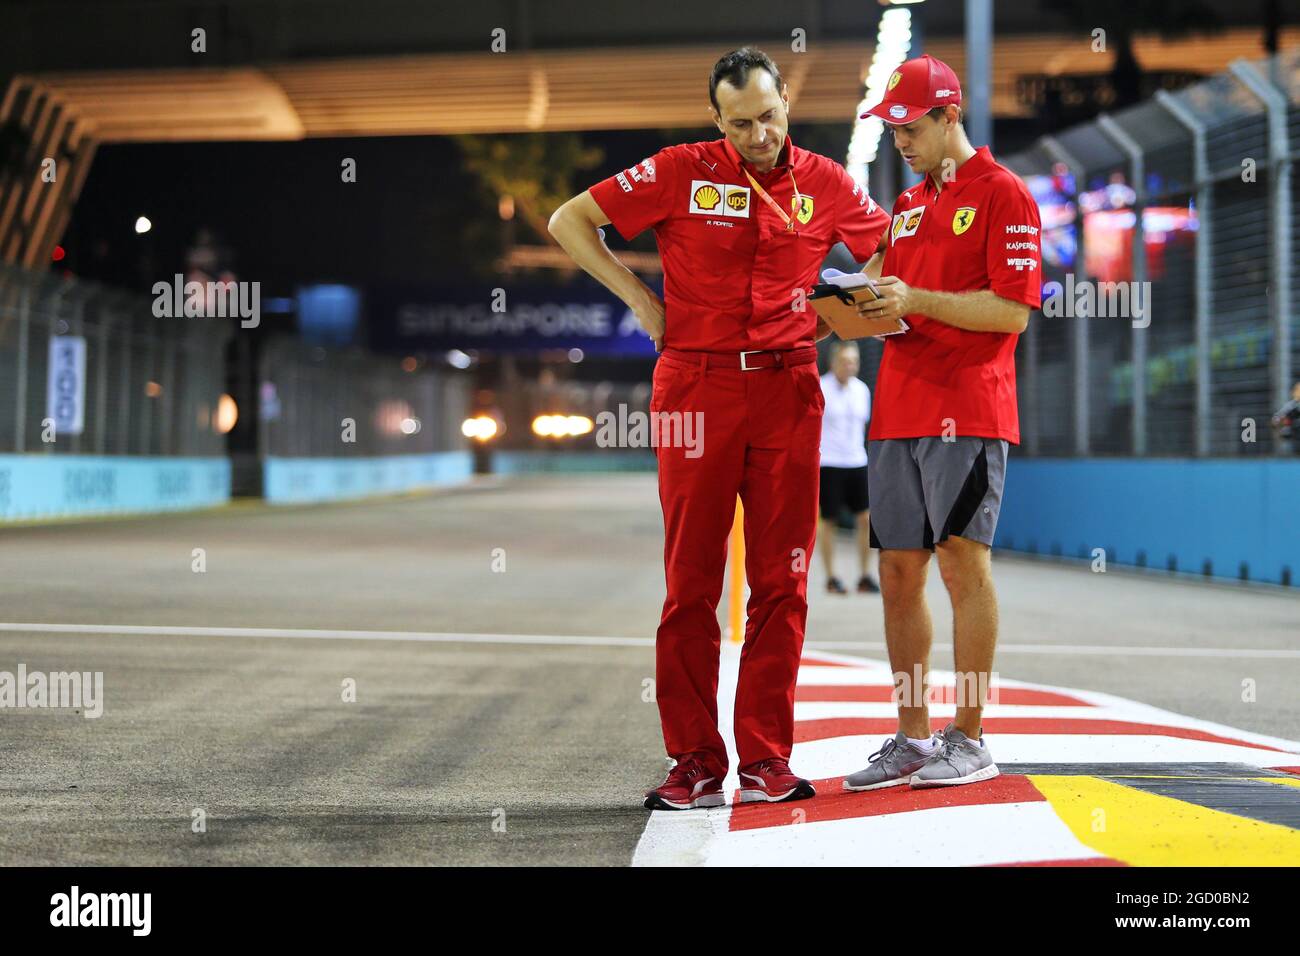 Sebastian Vettel (GER) Ferrari marche le circuit avec Riccardo Adami (ITA) Ferrari Race Engineer. Grand Prix de Singapour, jeudi 19 septembre 2019. Marina Bay Street circuit, Singapour. Banque D'Images